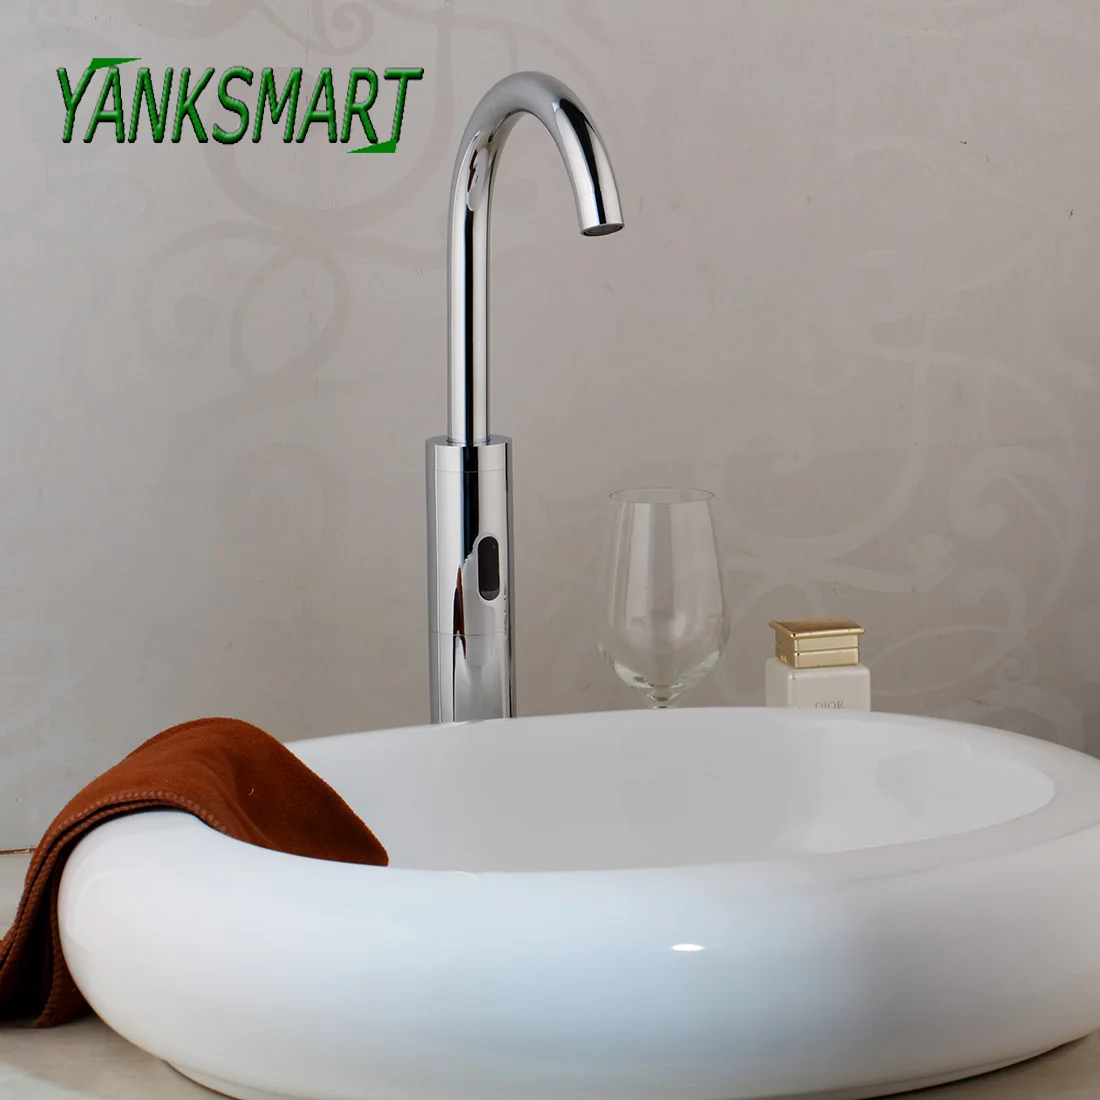 Us 66 0 40 Off Yanksmart Artistic Handmade Porcelain Lavabo Bathroom Vessel Sinks Ceramic Wash Basin Bathroom Washbasins Sense Mixer Set In Bathroom